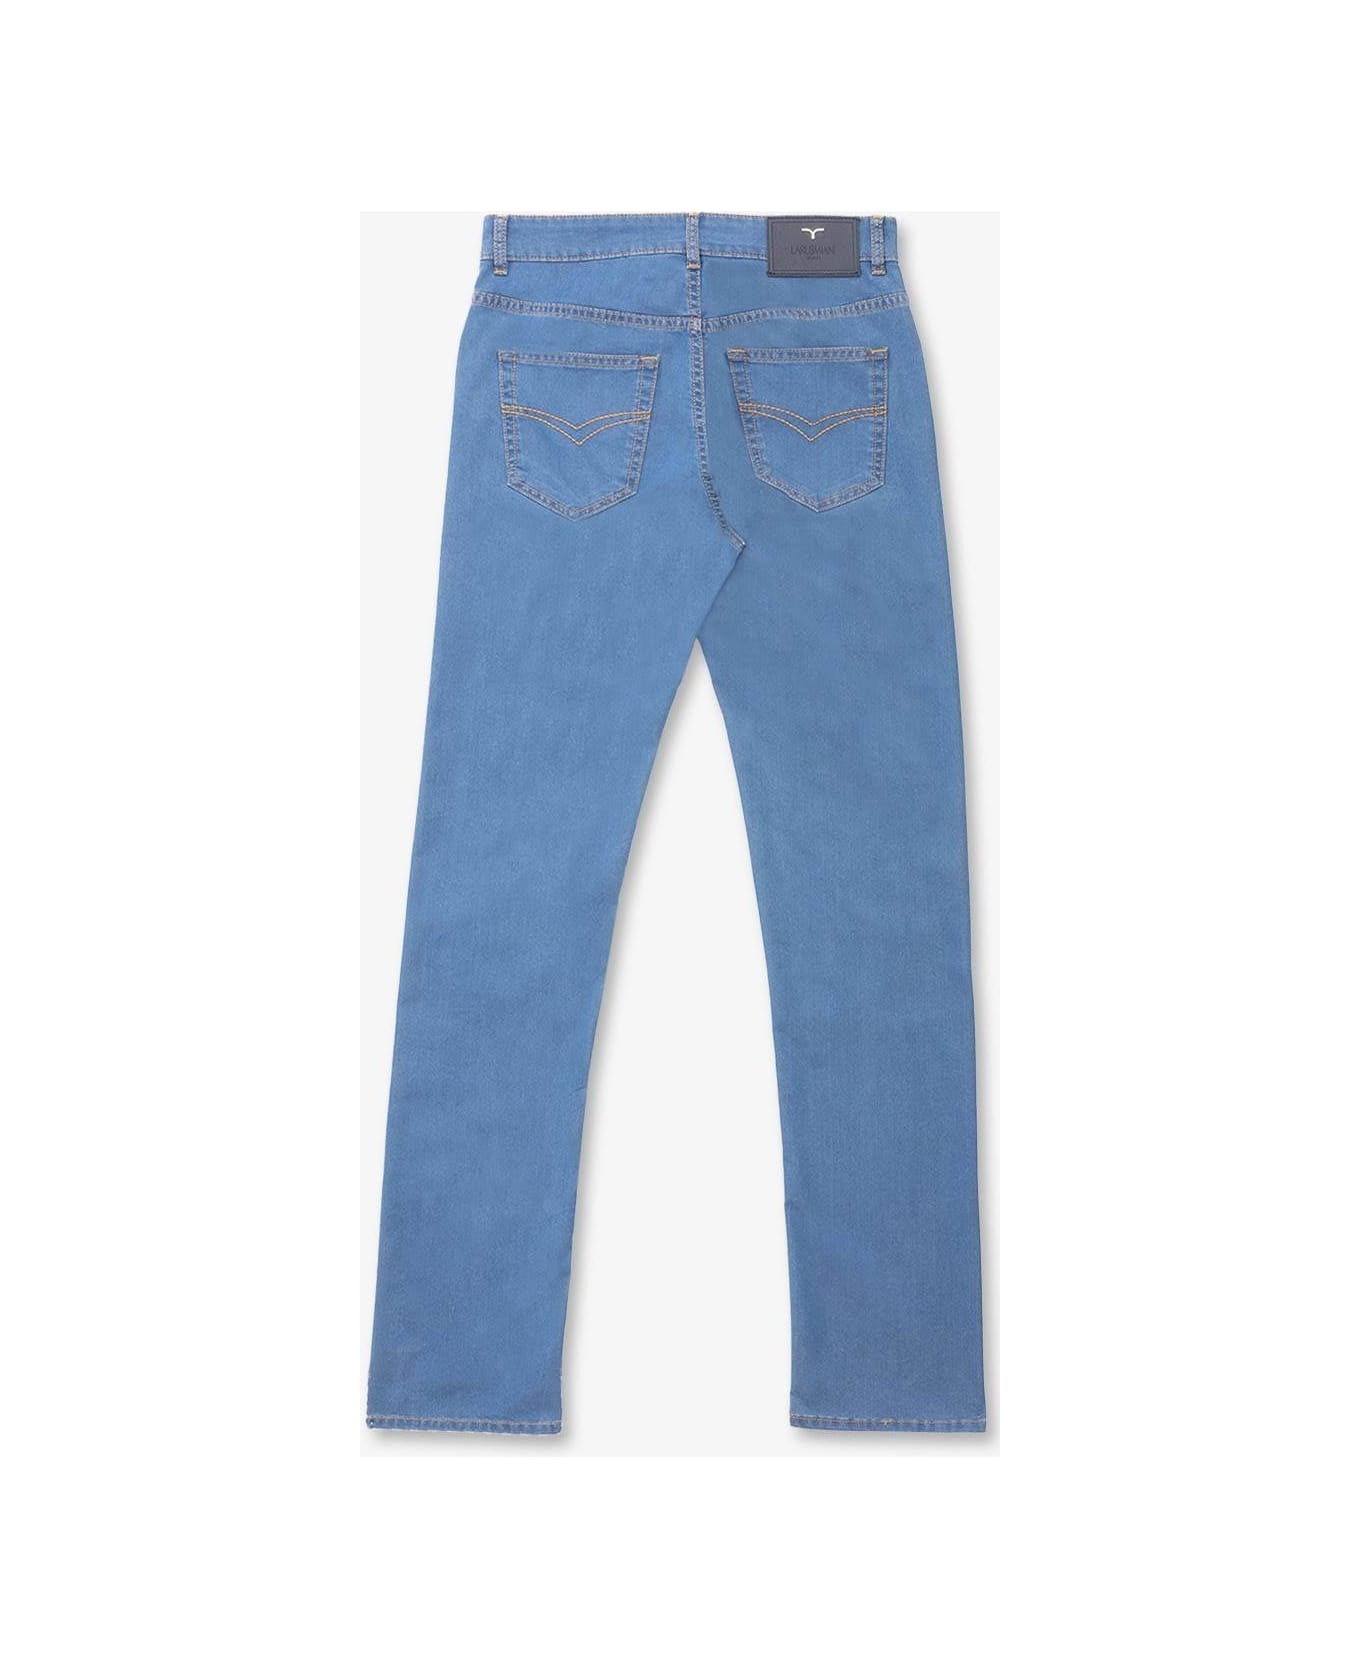 Larusmiani Trousers Jeans Jeans - LightBlue